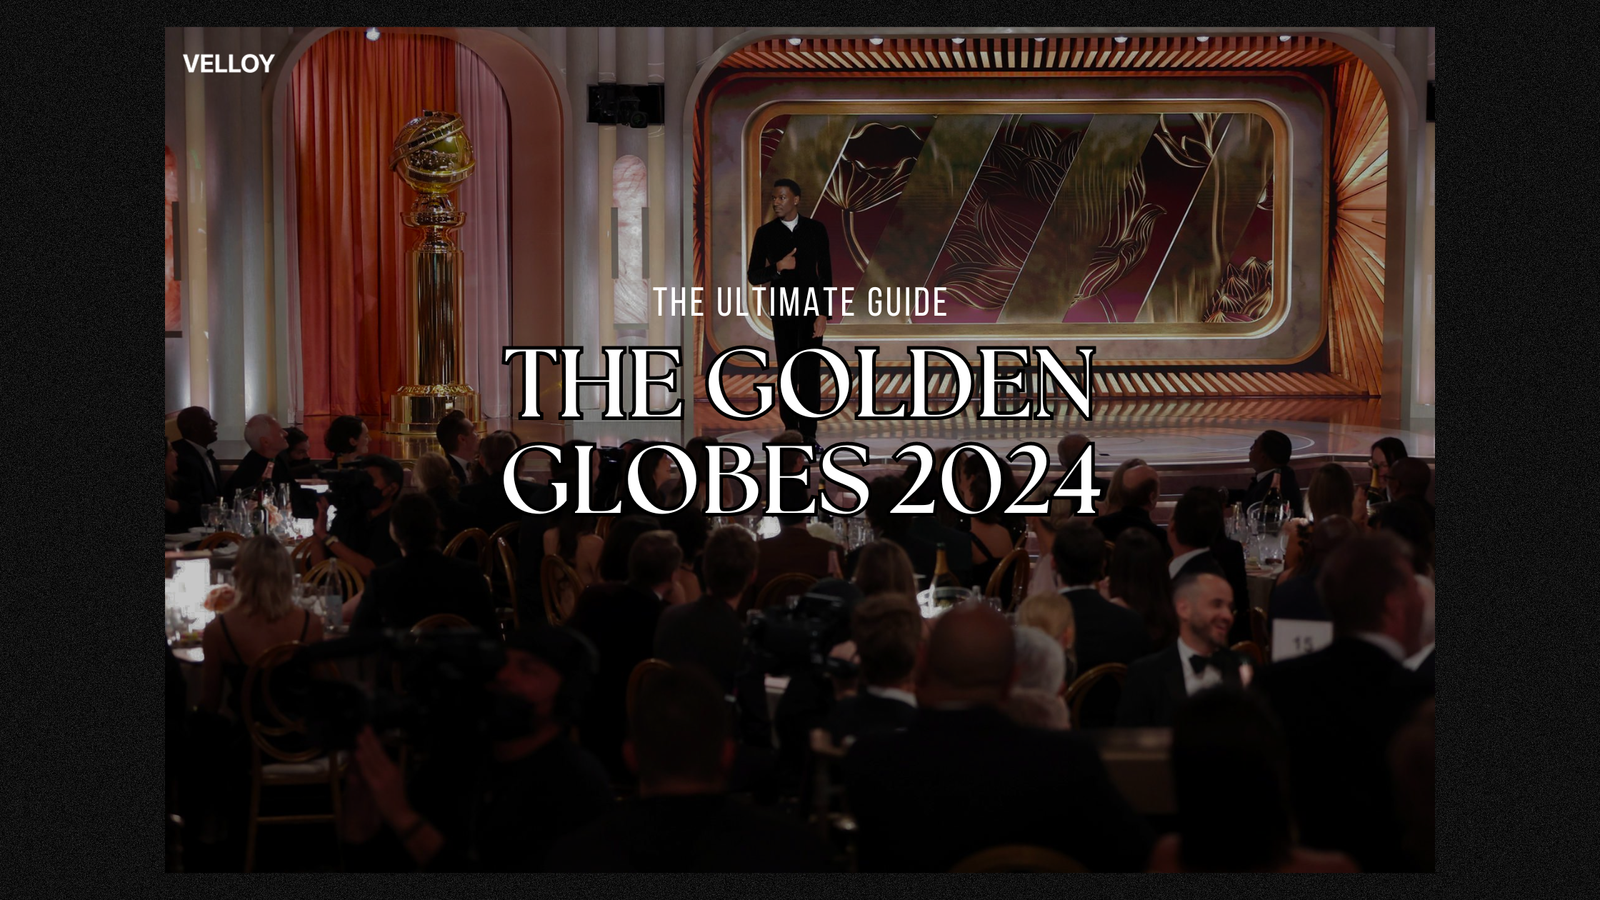 Golden Globes 2024: Nominations, Hosts, Dates & More